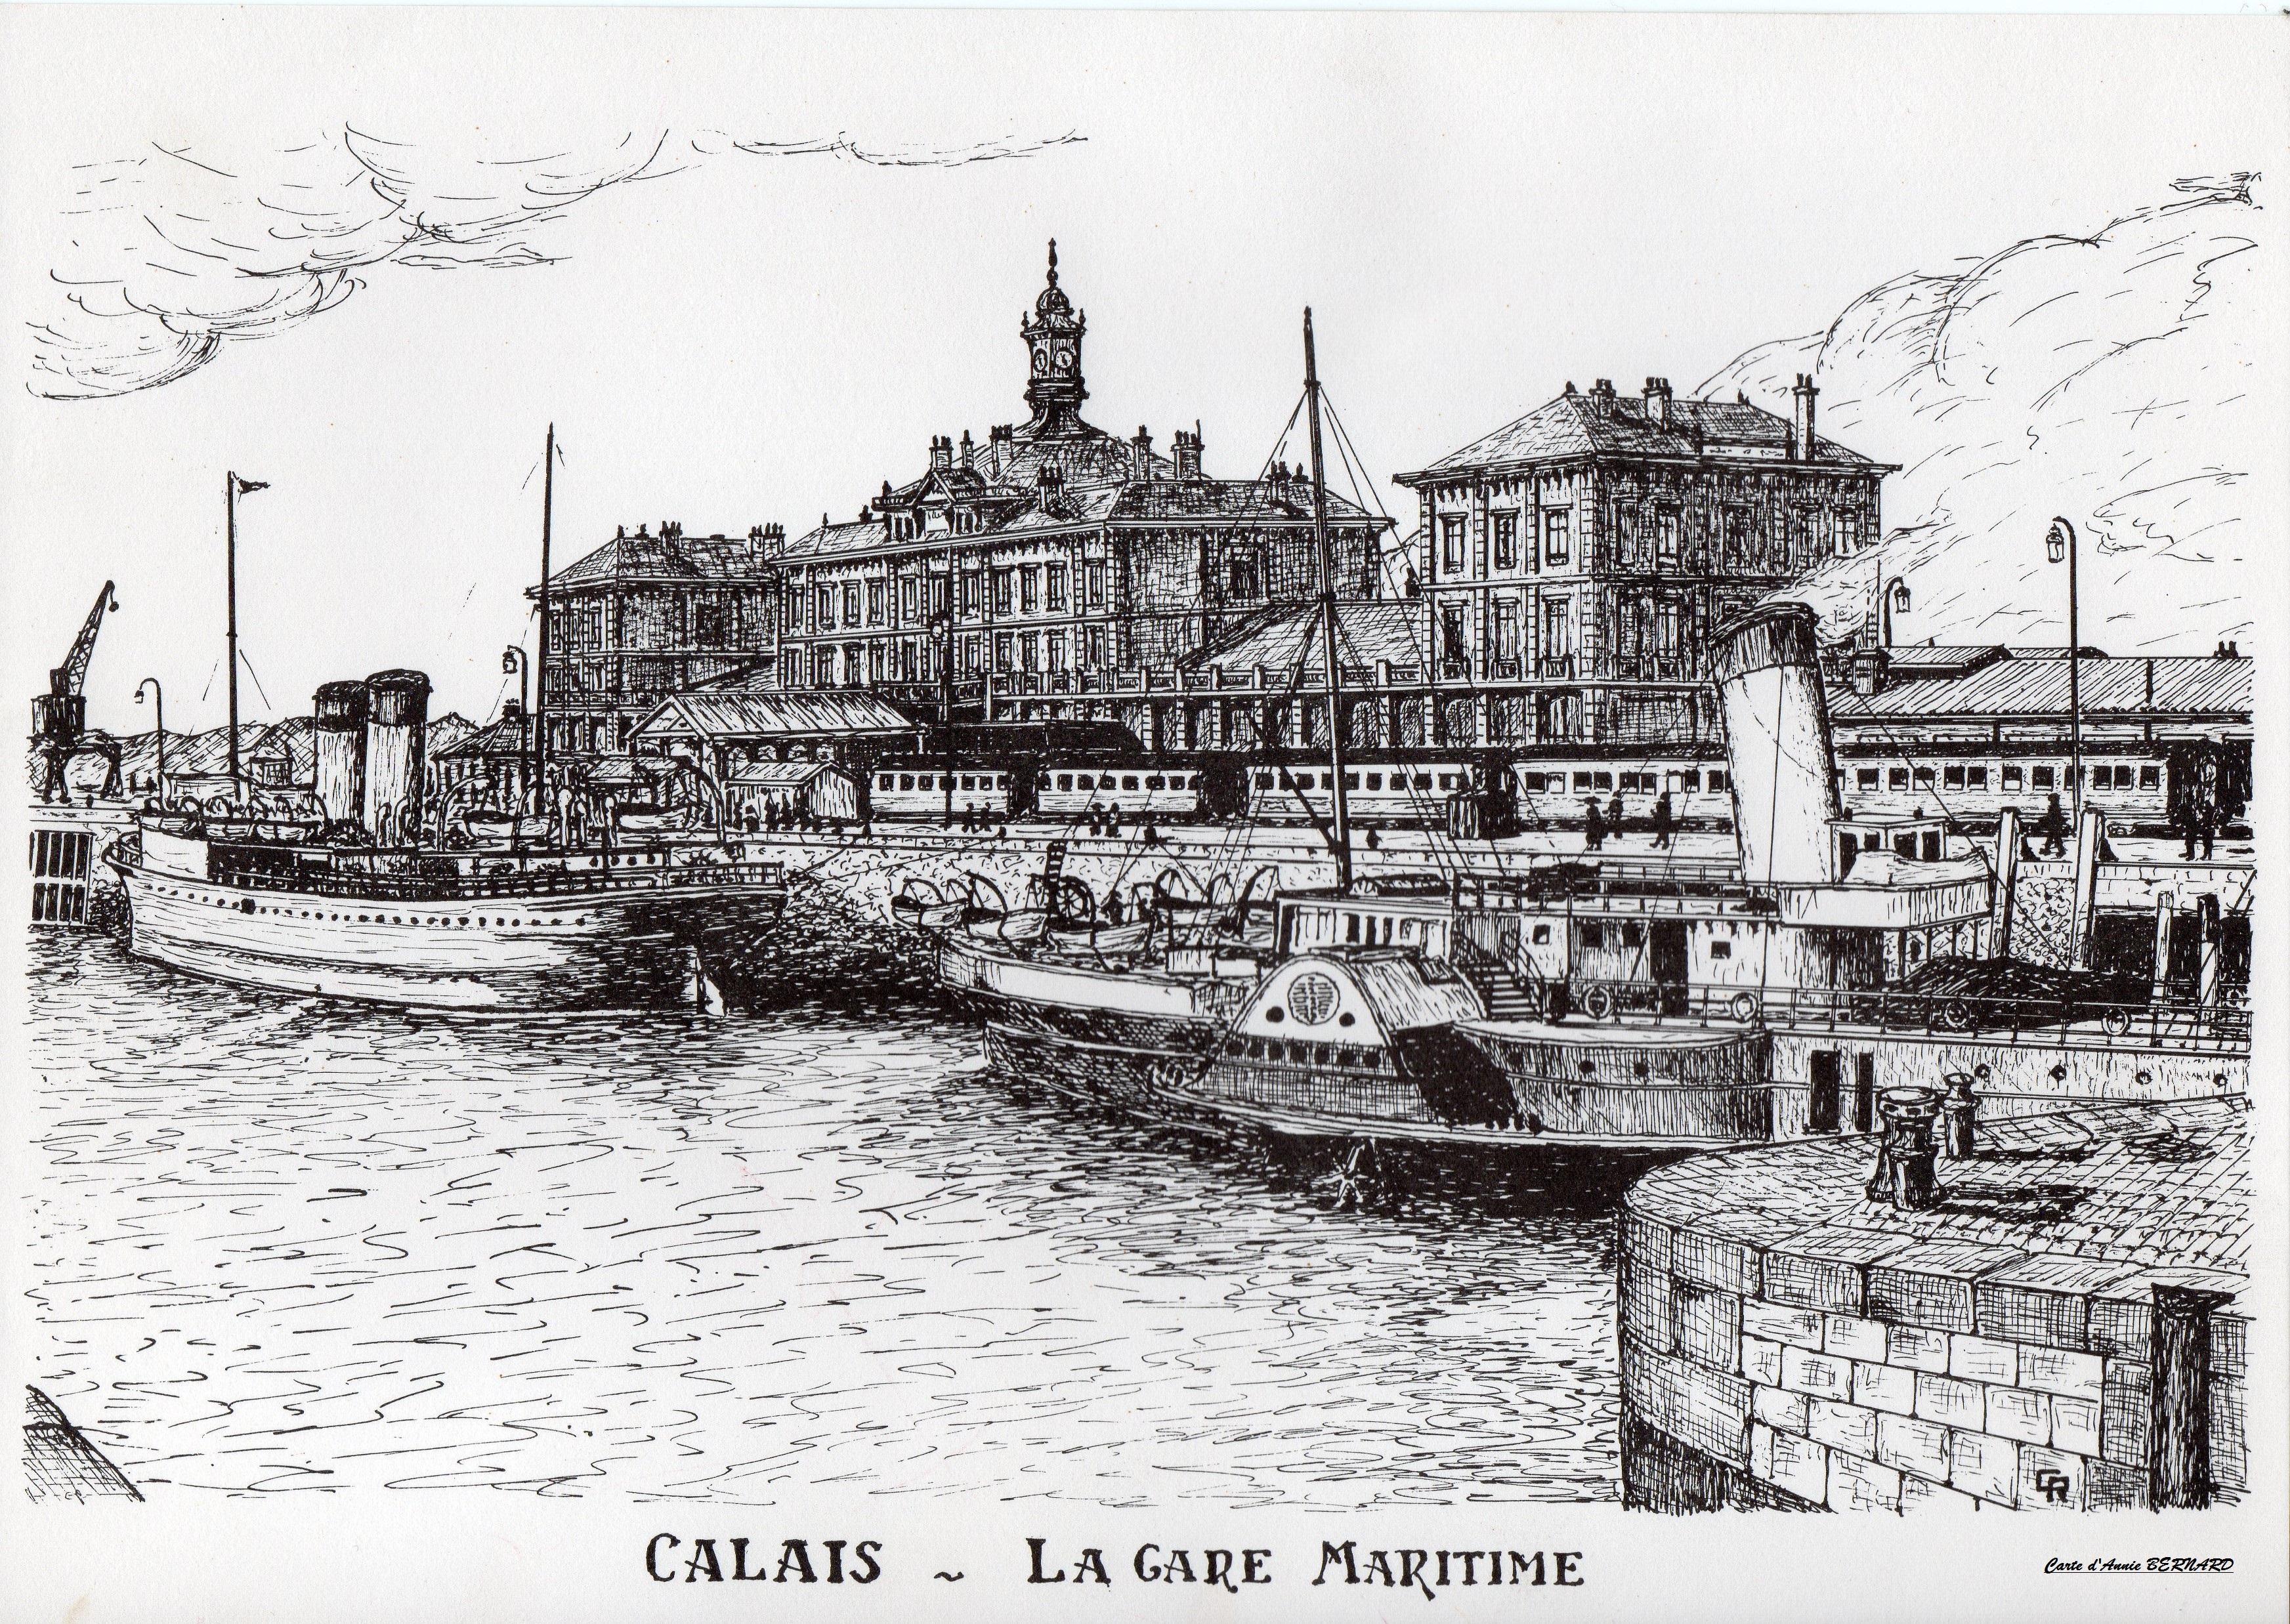 Calais rétro, la gare maritime